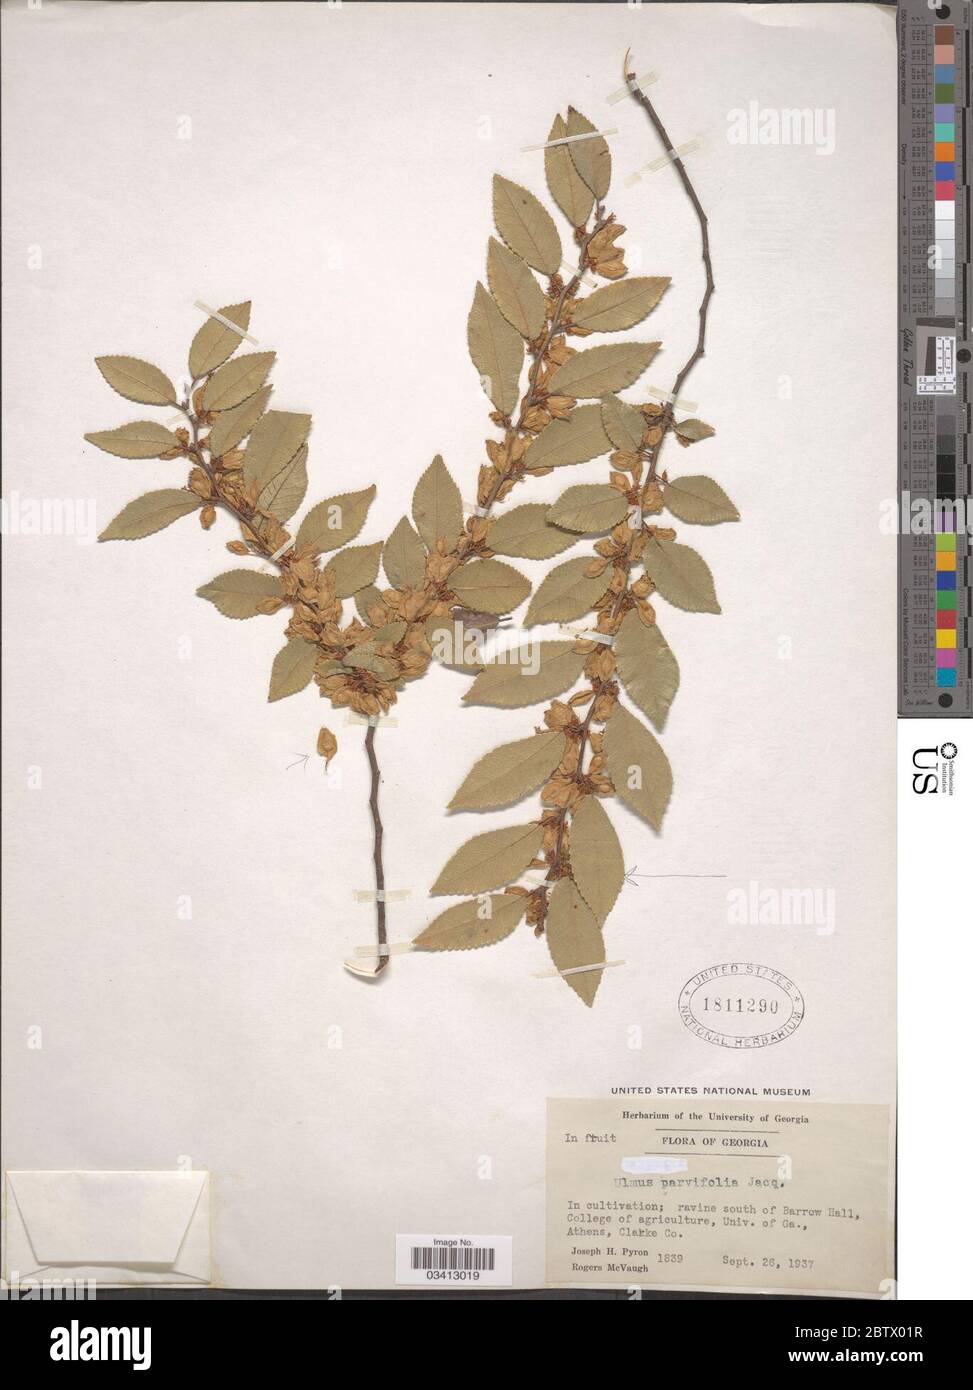 Ulmus parvifolia Jacq. Stock Photo